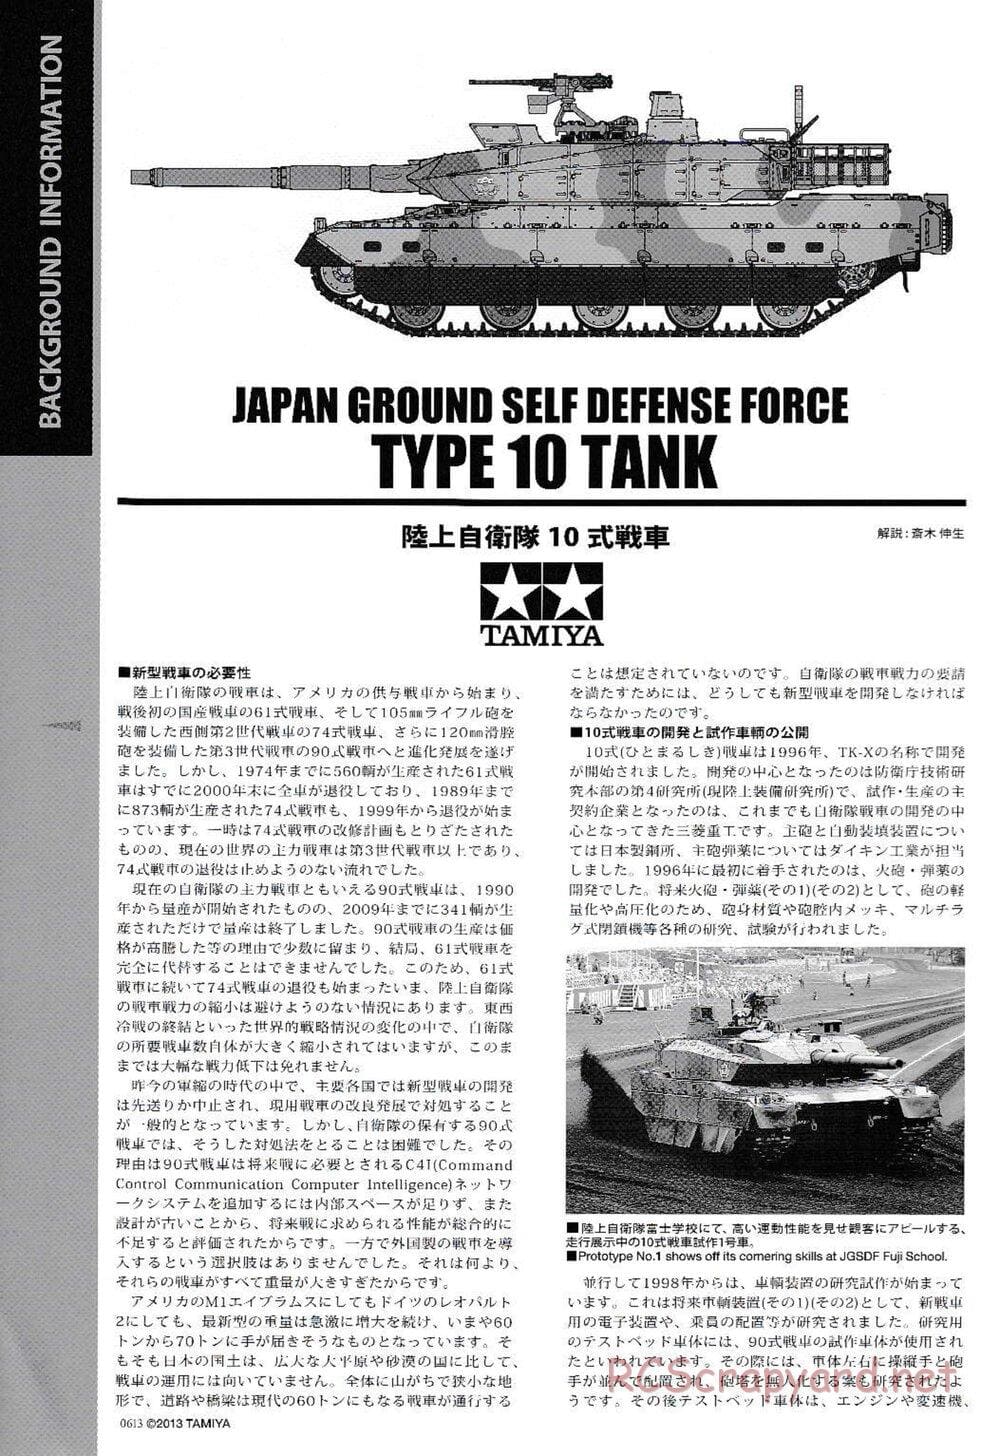 Tamiya - JGSDF Type 10 Tank - 1/35 Scale Body - Manual - Page 1